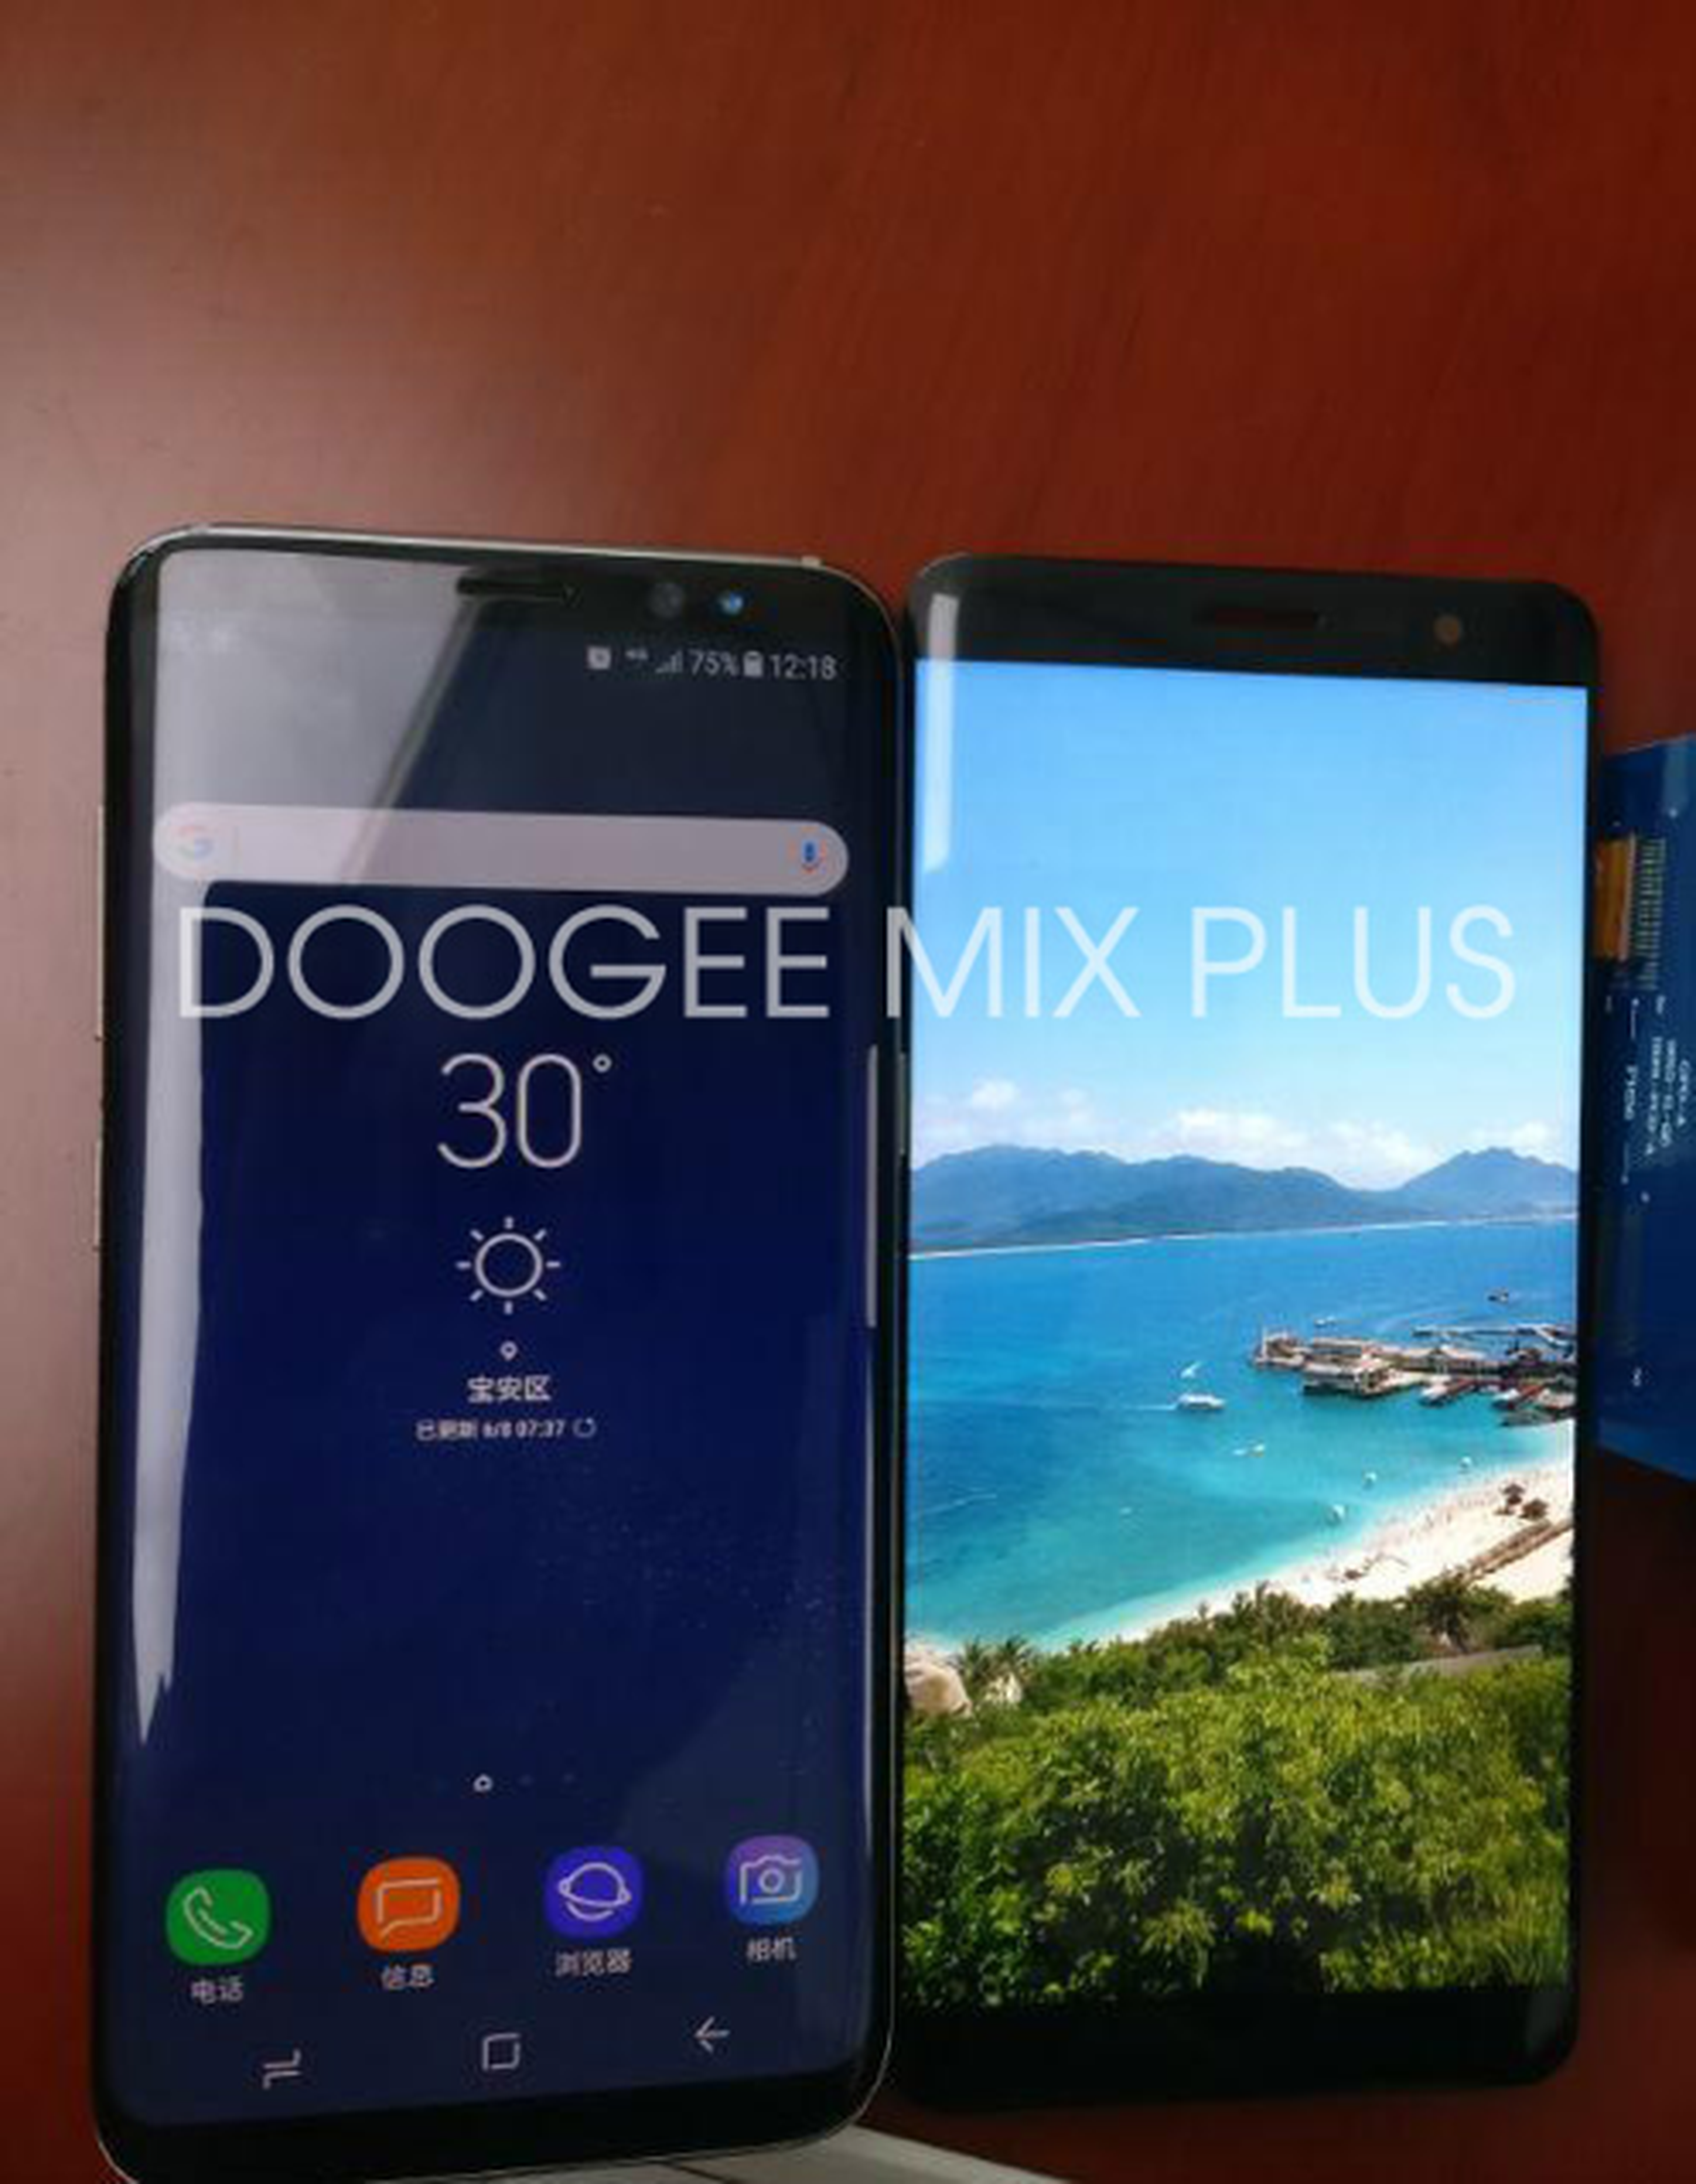 Doogee Mix Plus vs. Samsung Galaxy S8